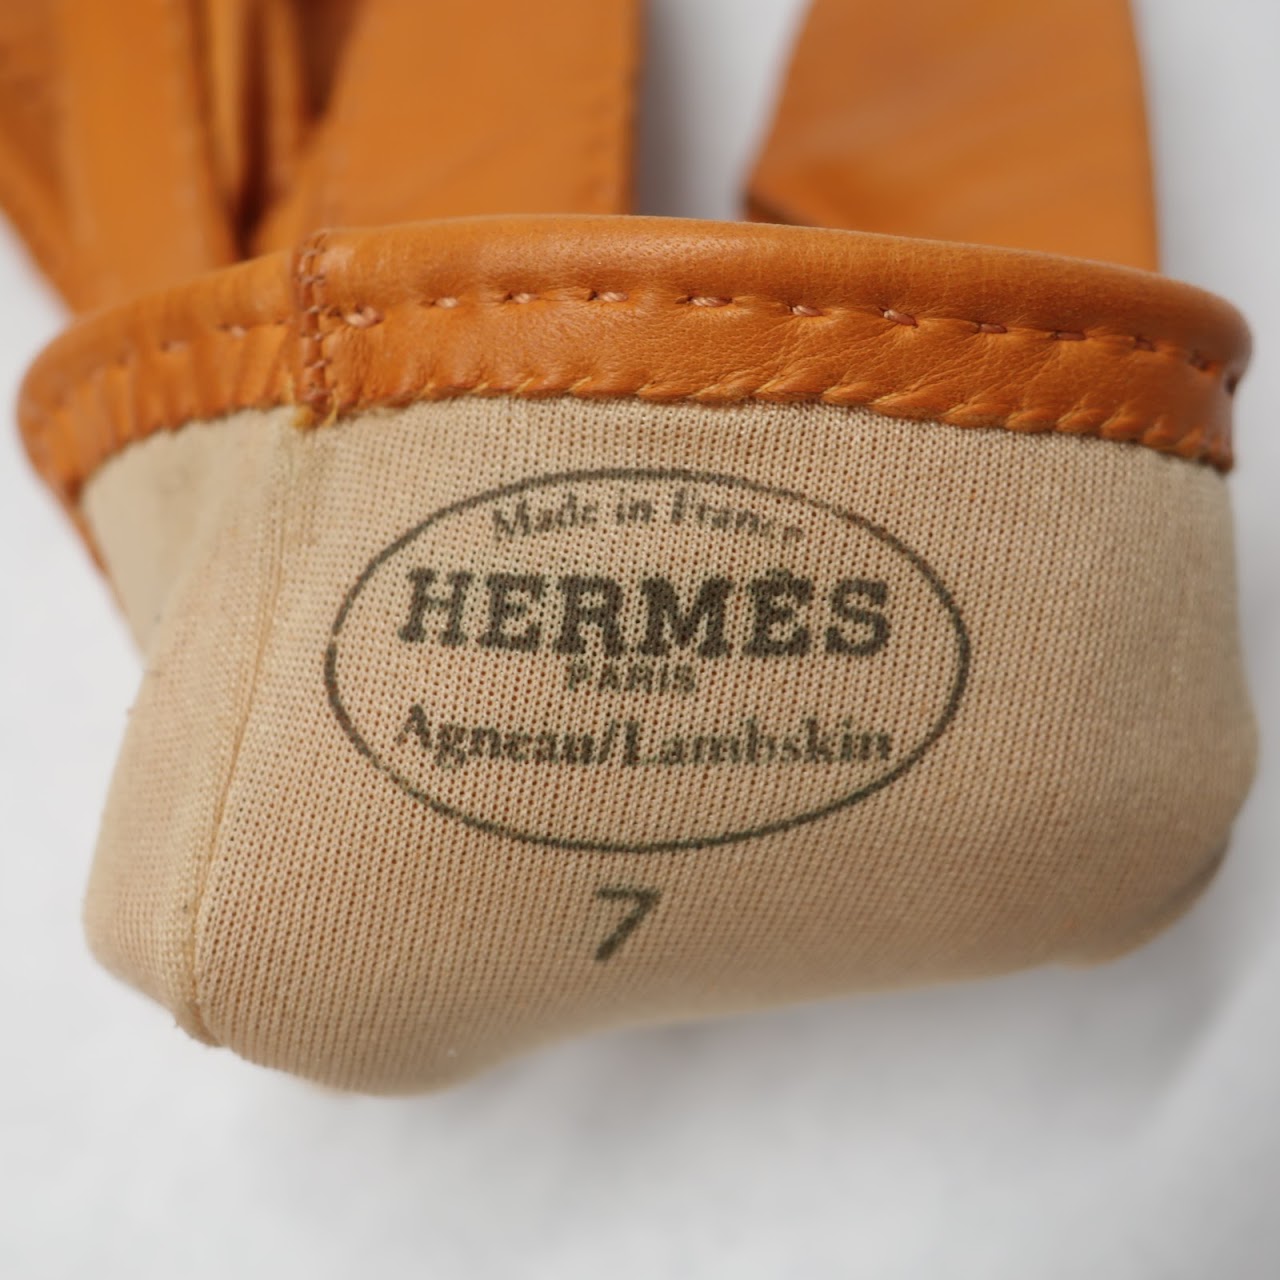 Hermès Lambskin Gloves